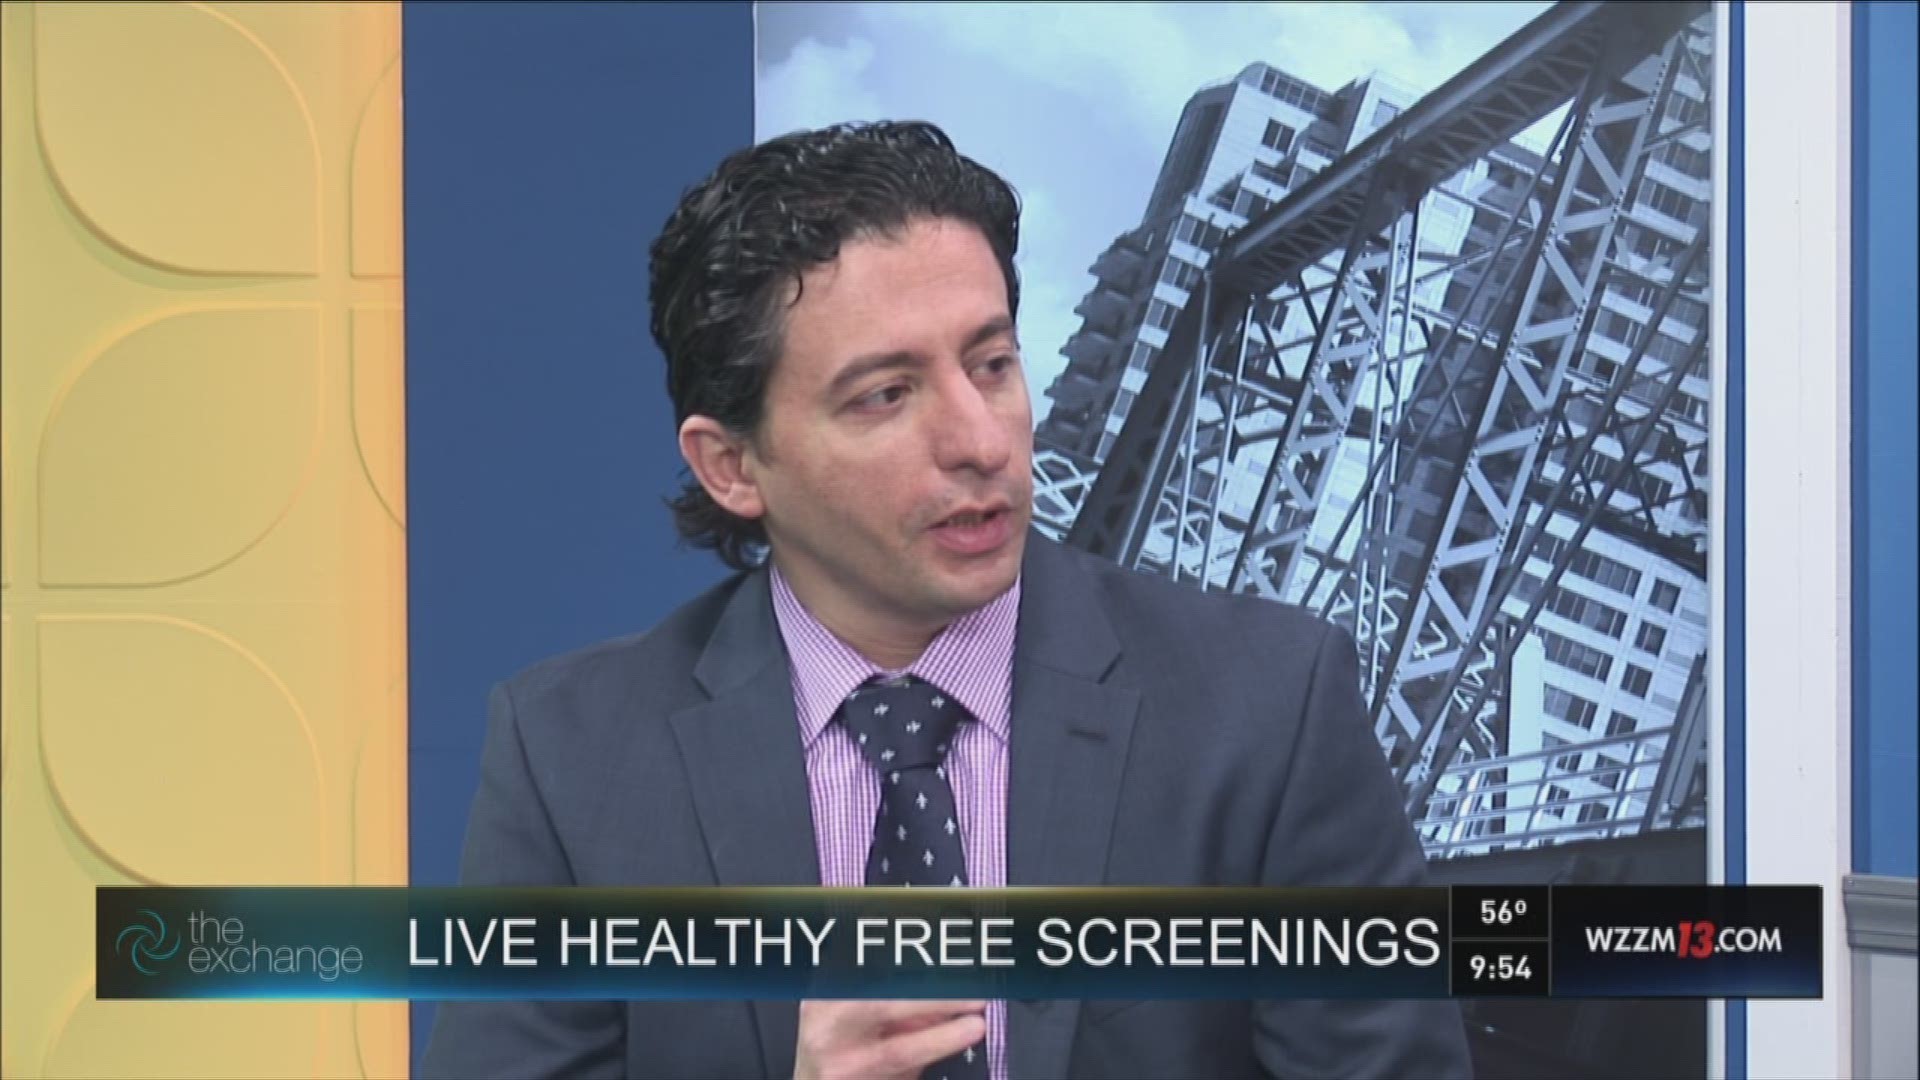 The Exchange: Live Healthy Free Screenings